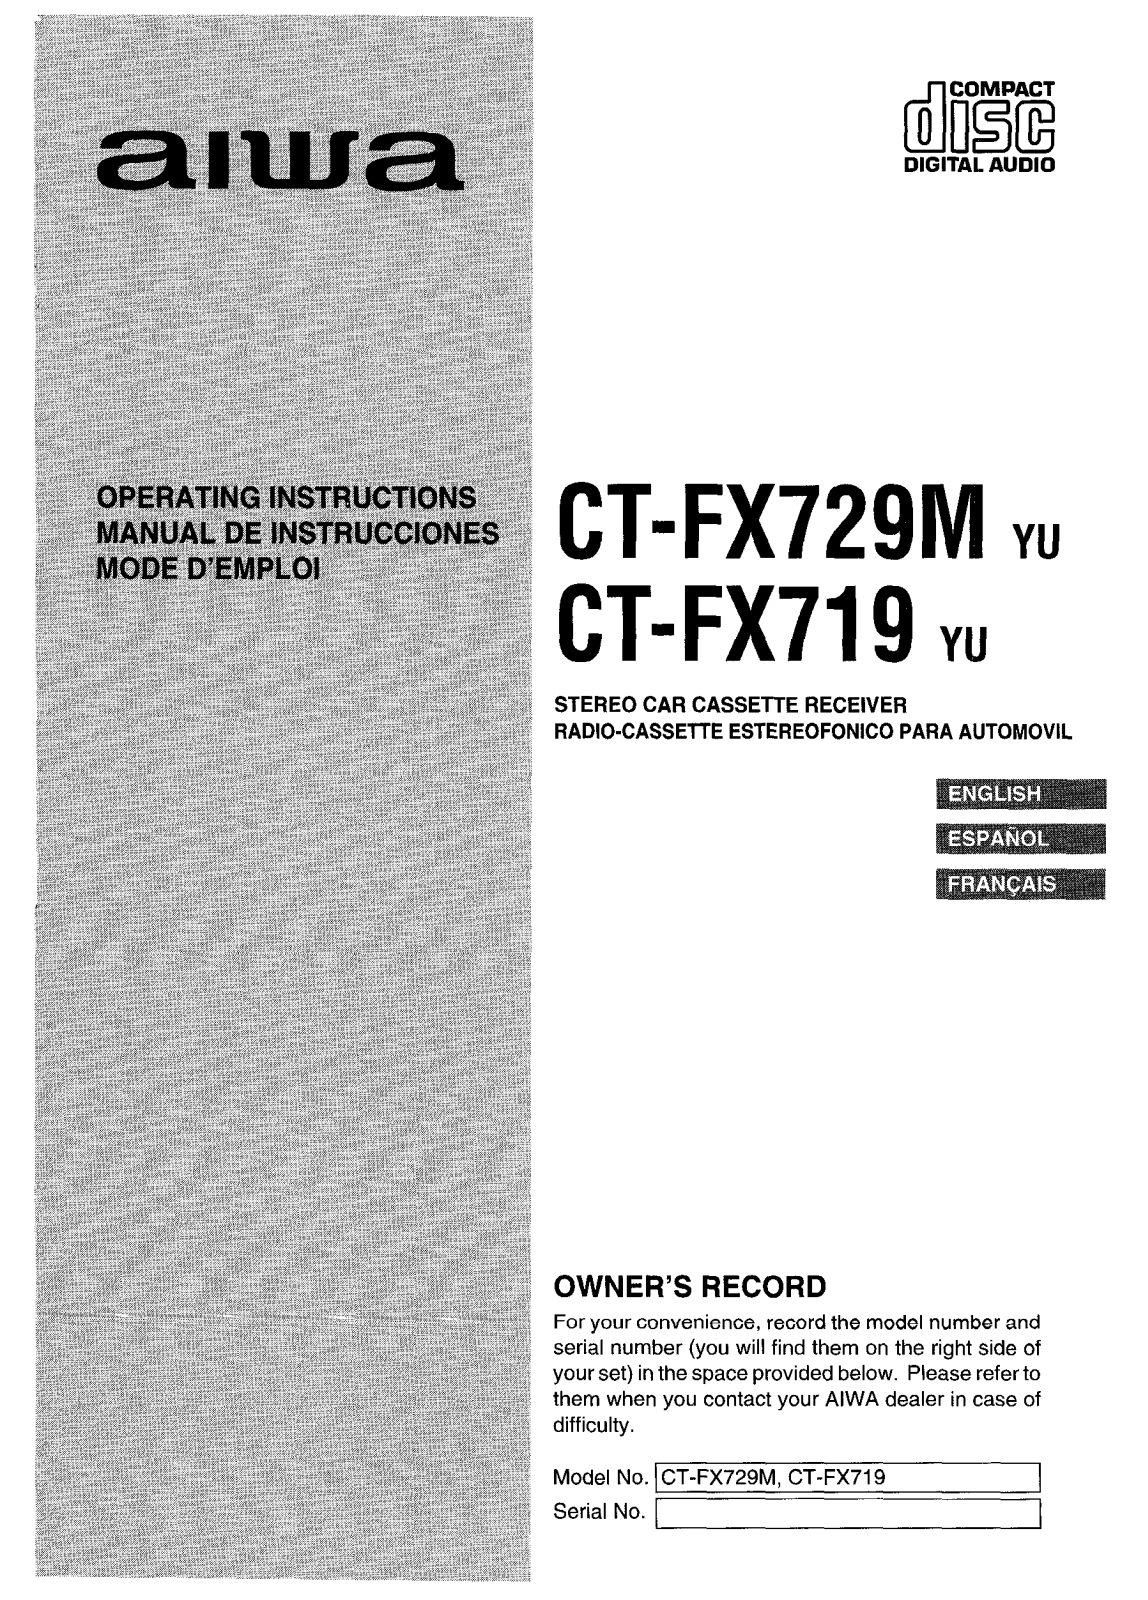 Sony CTFX719yu, CTFX729M yu Operating Manual